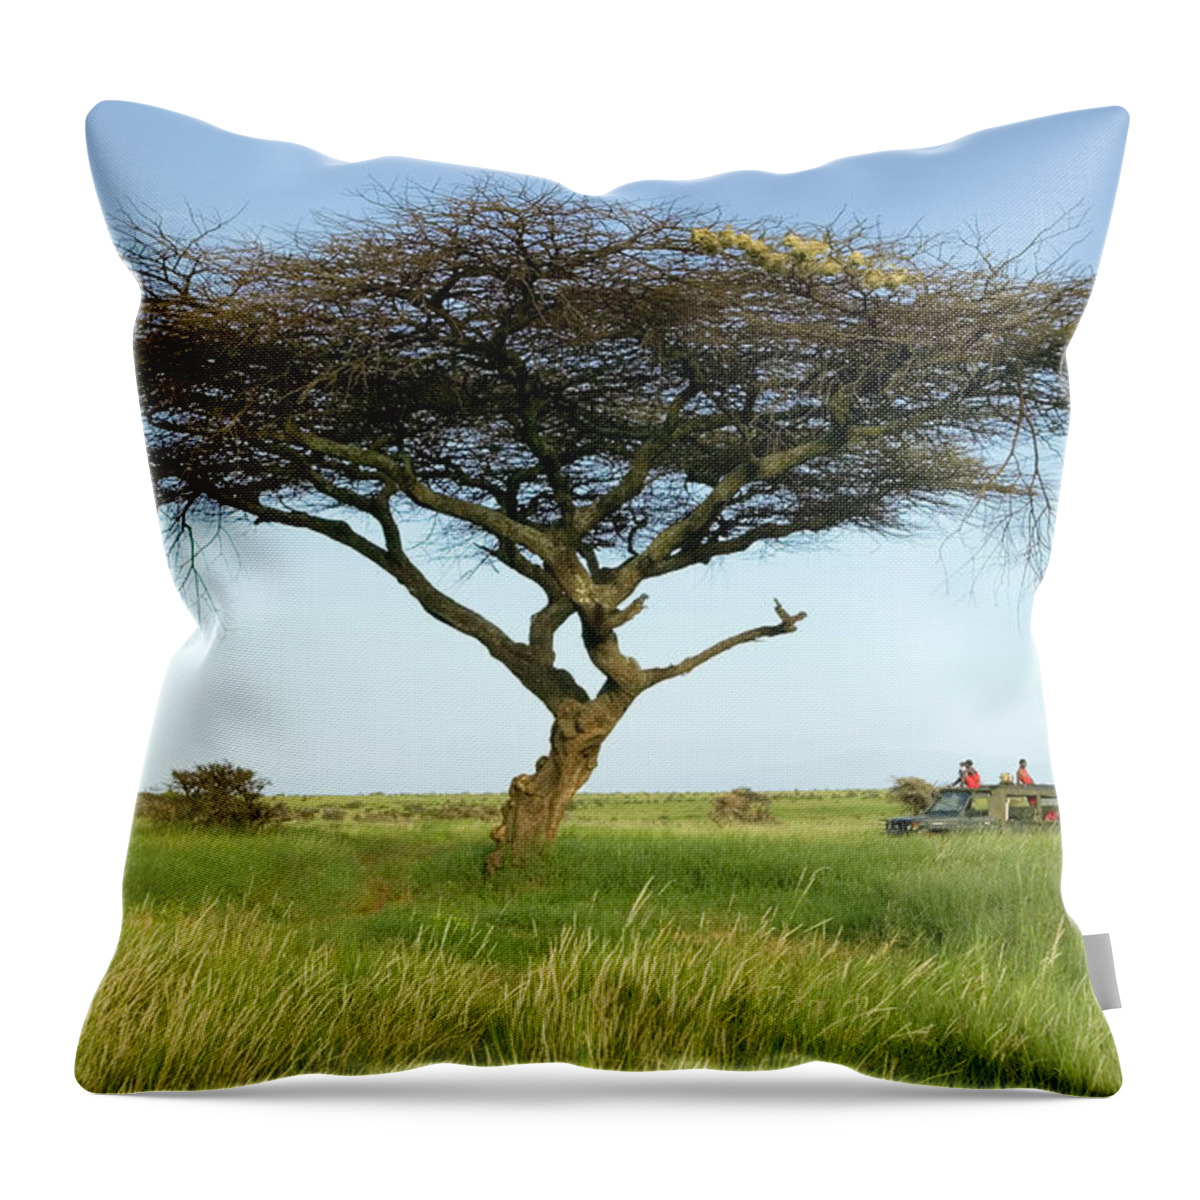 Scenics Throw Pillow featuring the photograph Kenya, Lewa Conservancy, Masai Safari by Visionsofamerica.com/joe Sohm